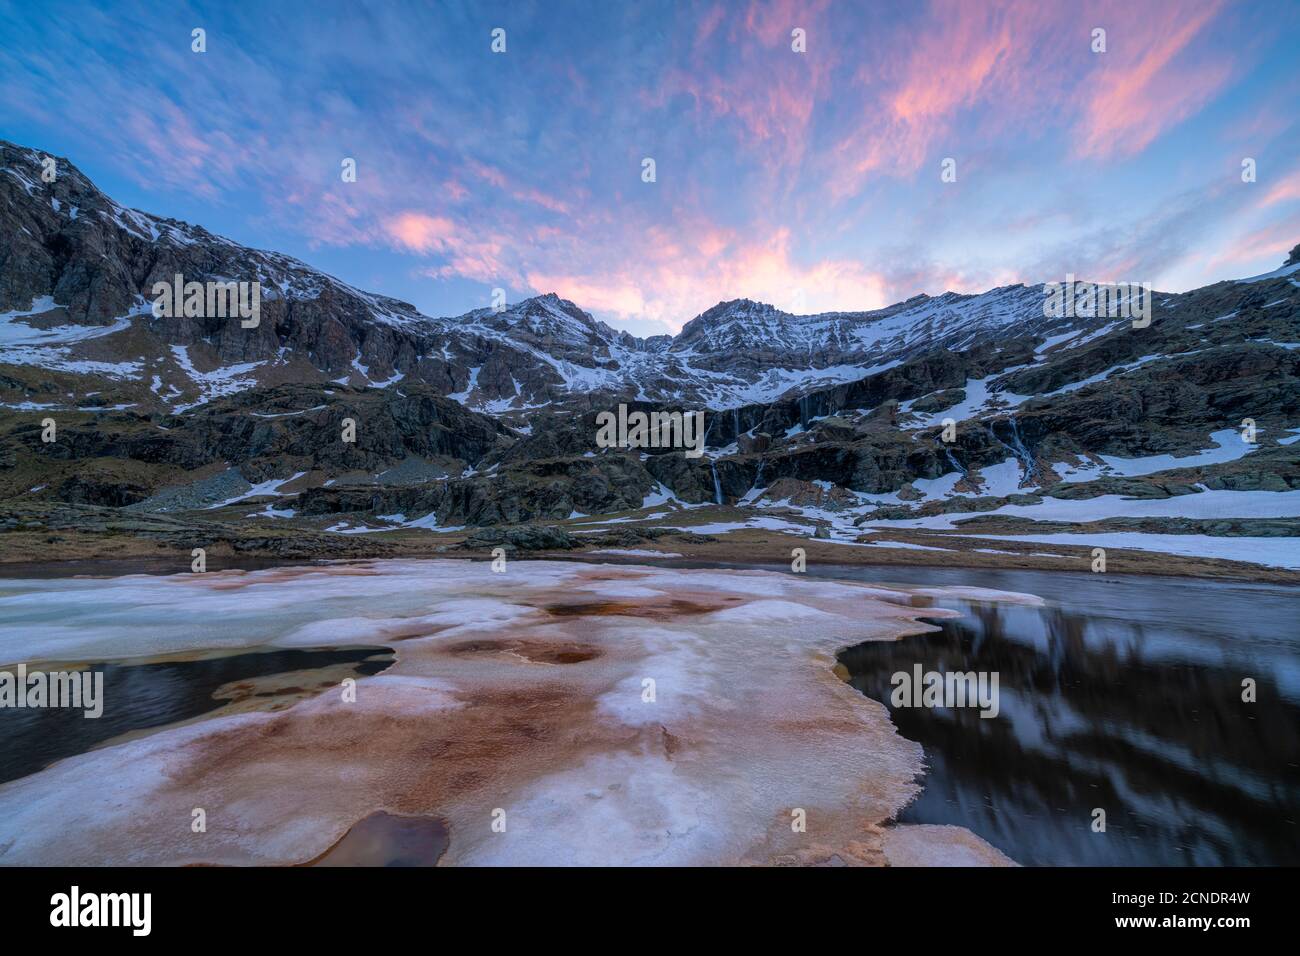 Melting ice during thaw at dawn, Alpe Fora, Valmalenco, Sondrio province, Valtellina, Lombardy, Italy, Europe Stock Photo